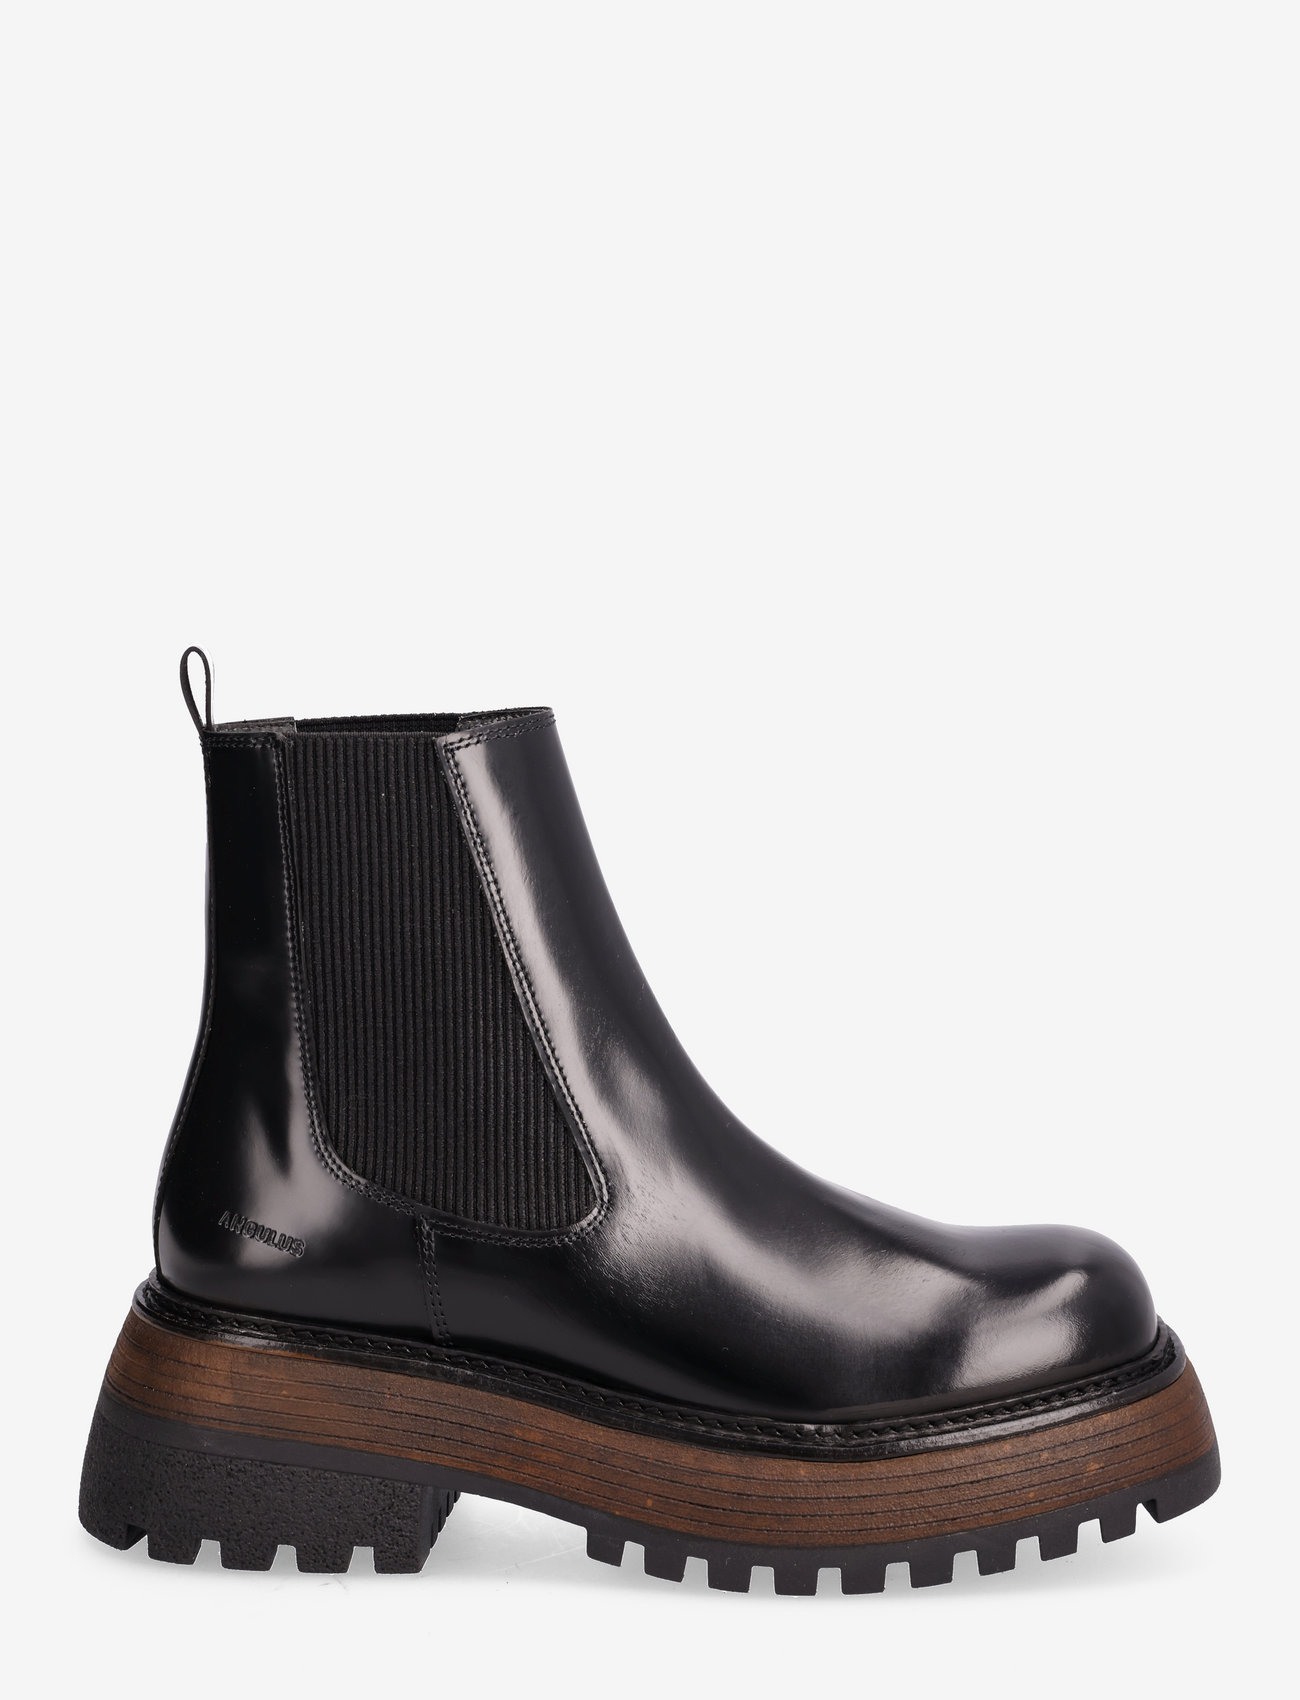 ANGULUS - Boots - flat - chelsea stila zābaki - 1425/019 black/black - 1